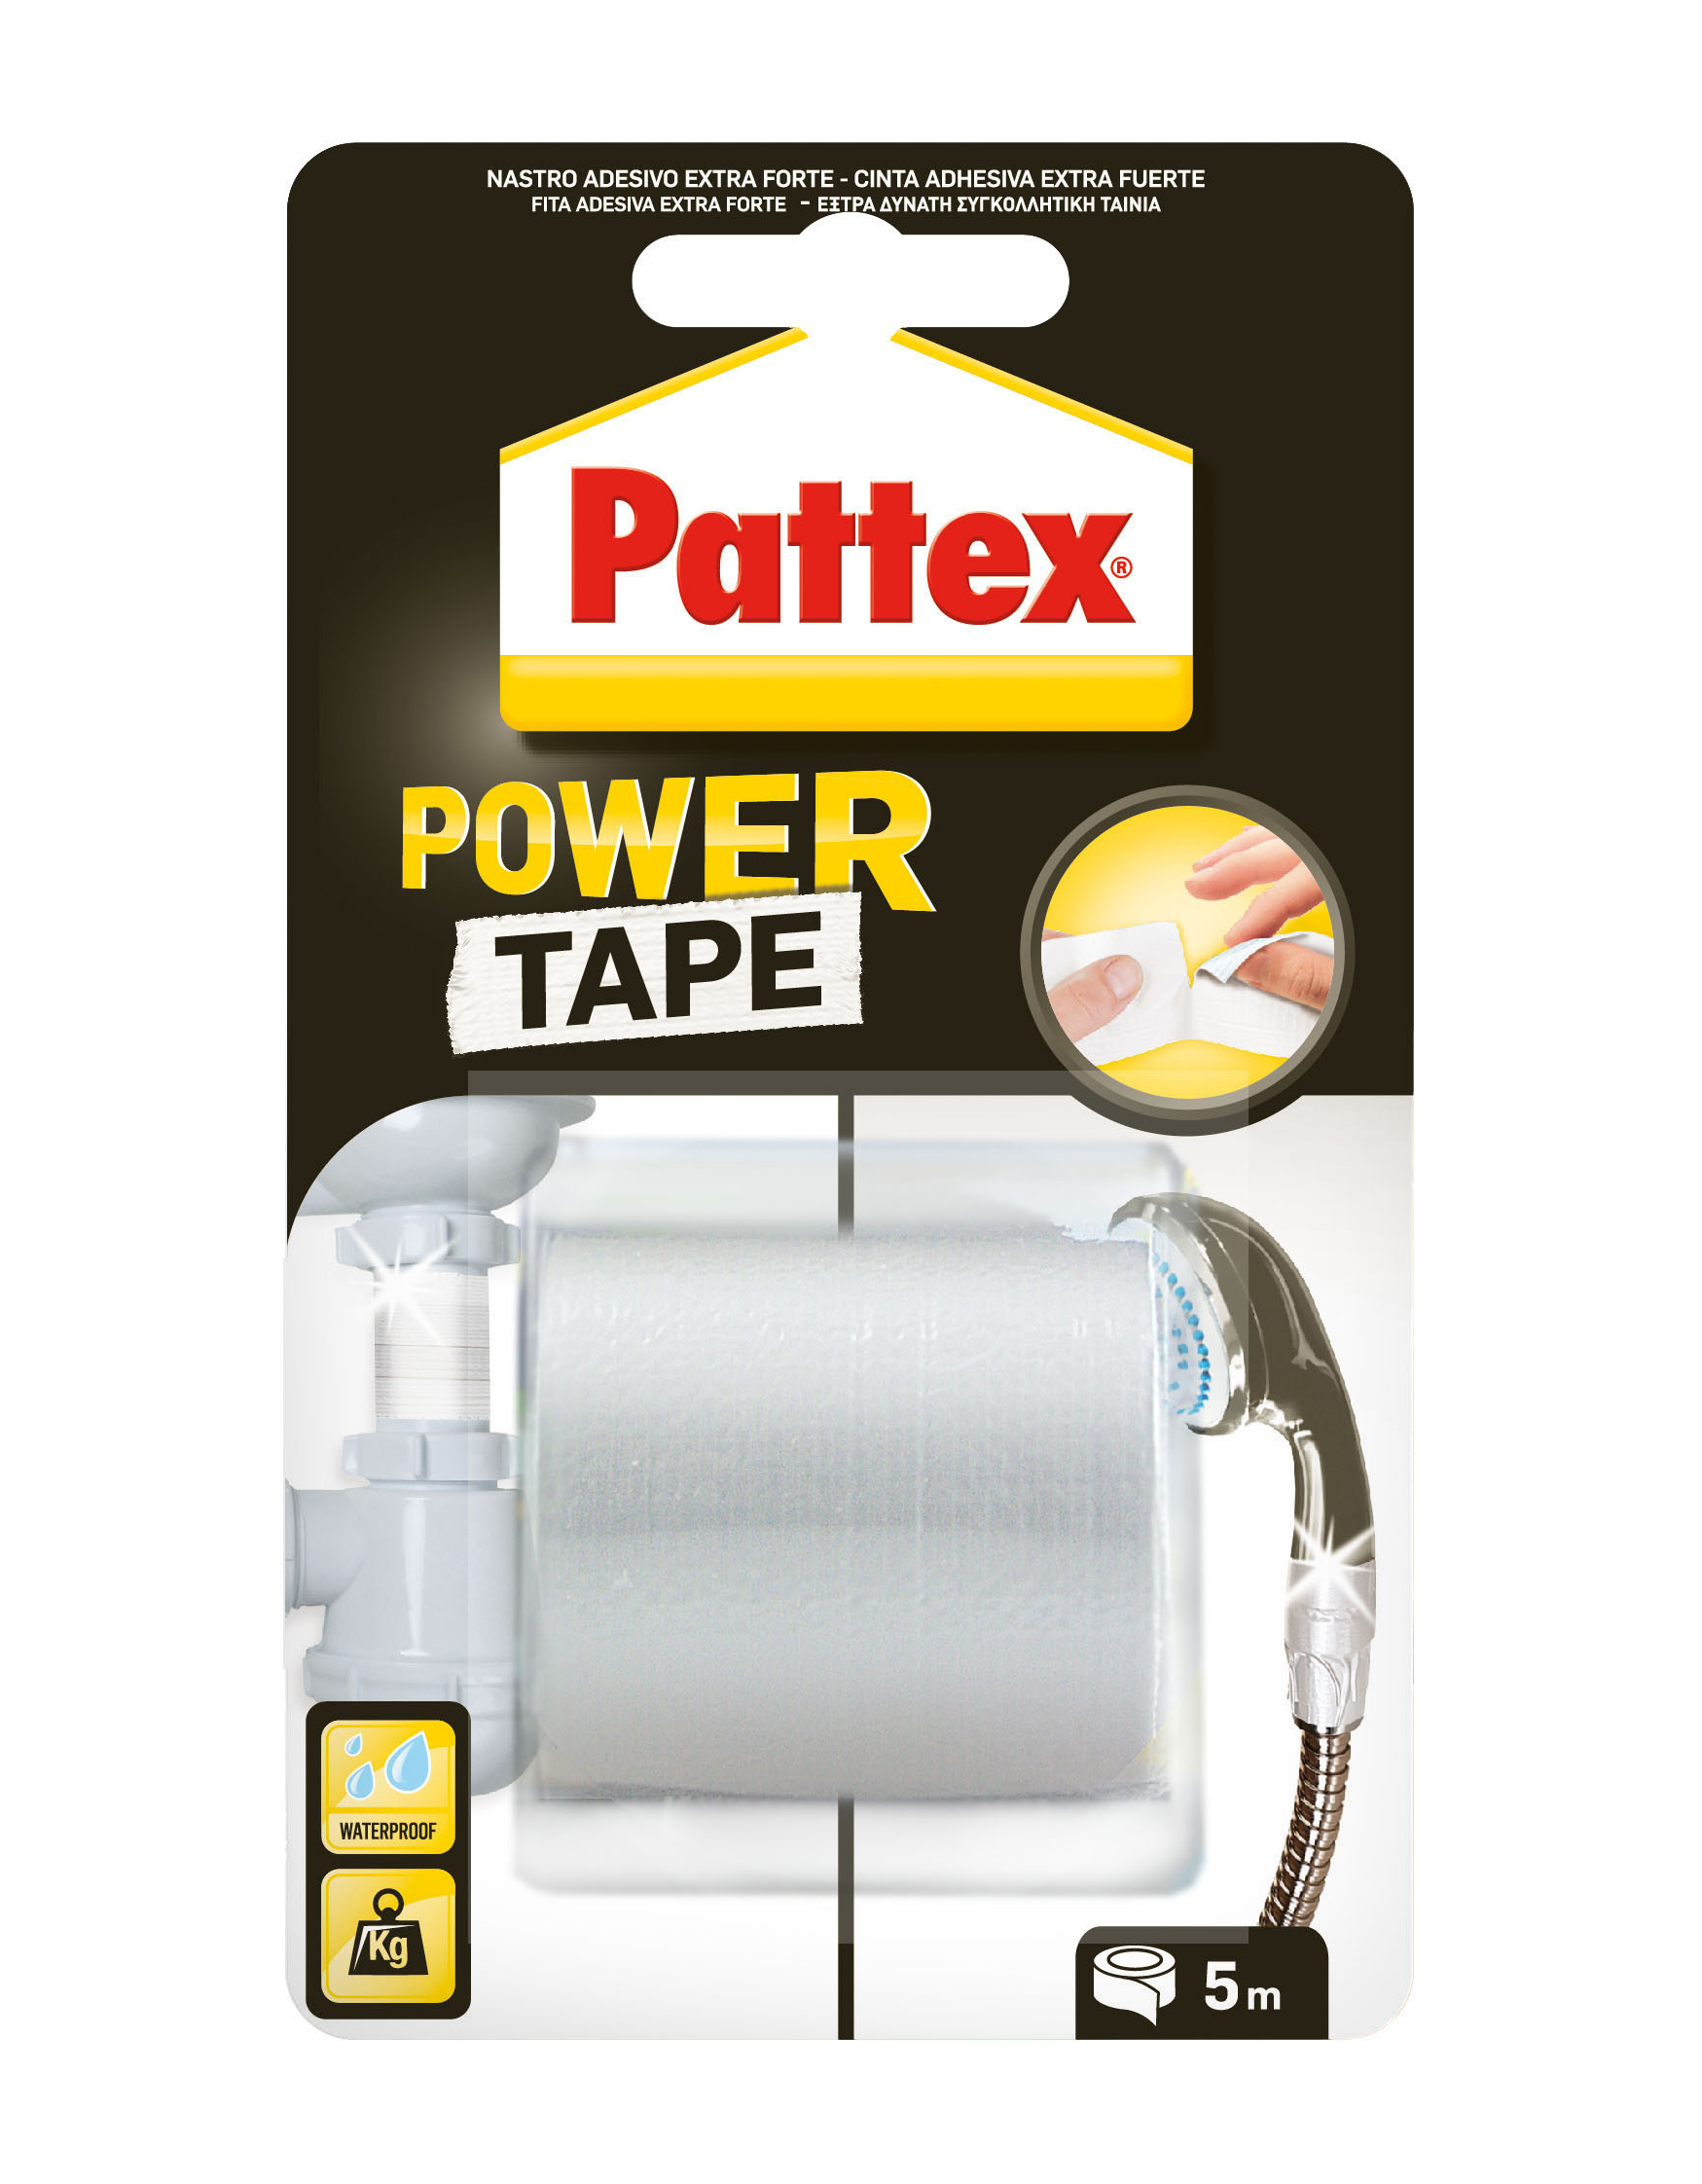 Pattex power tape bianco 5m